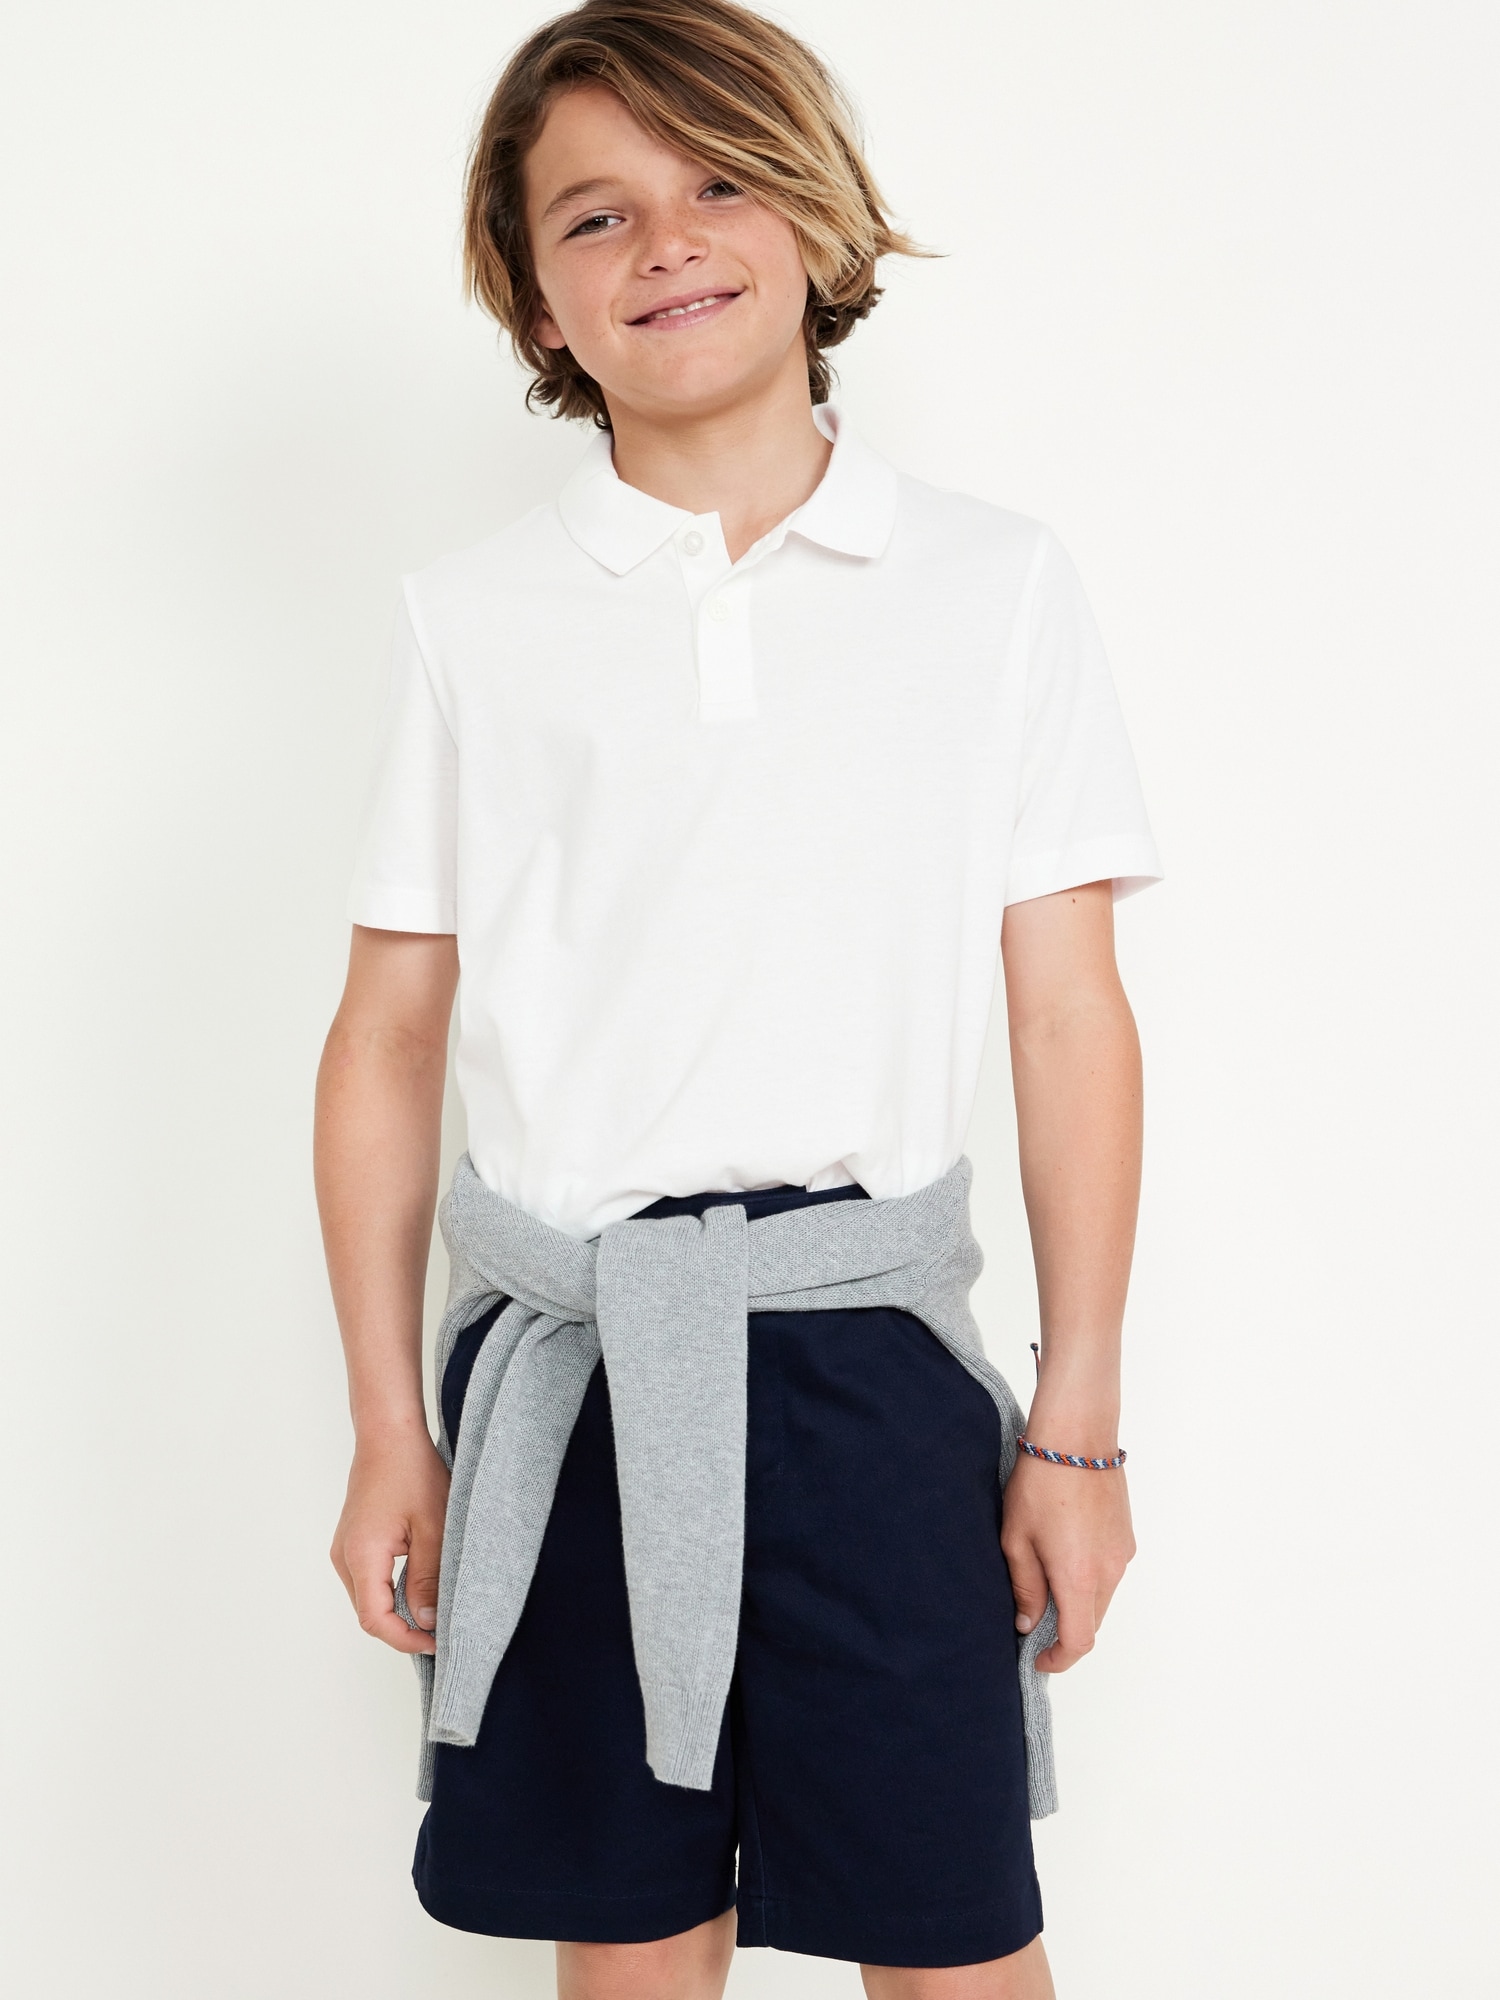 School Uniform Jersey Polo Shirt for Boys